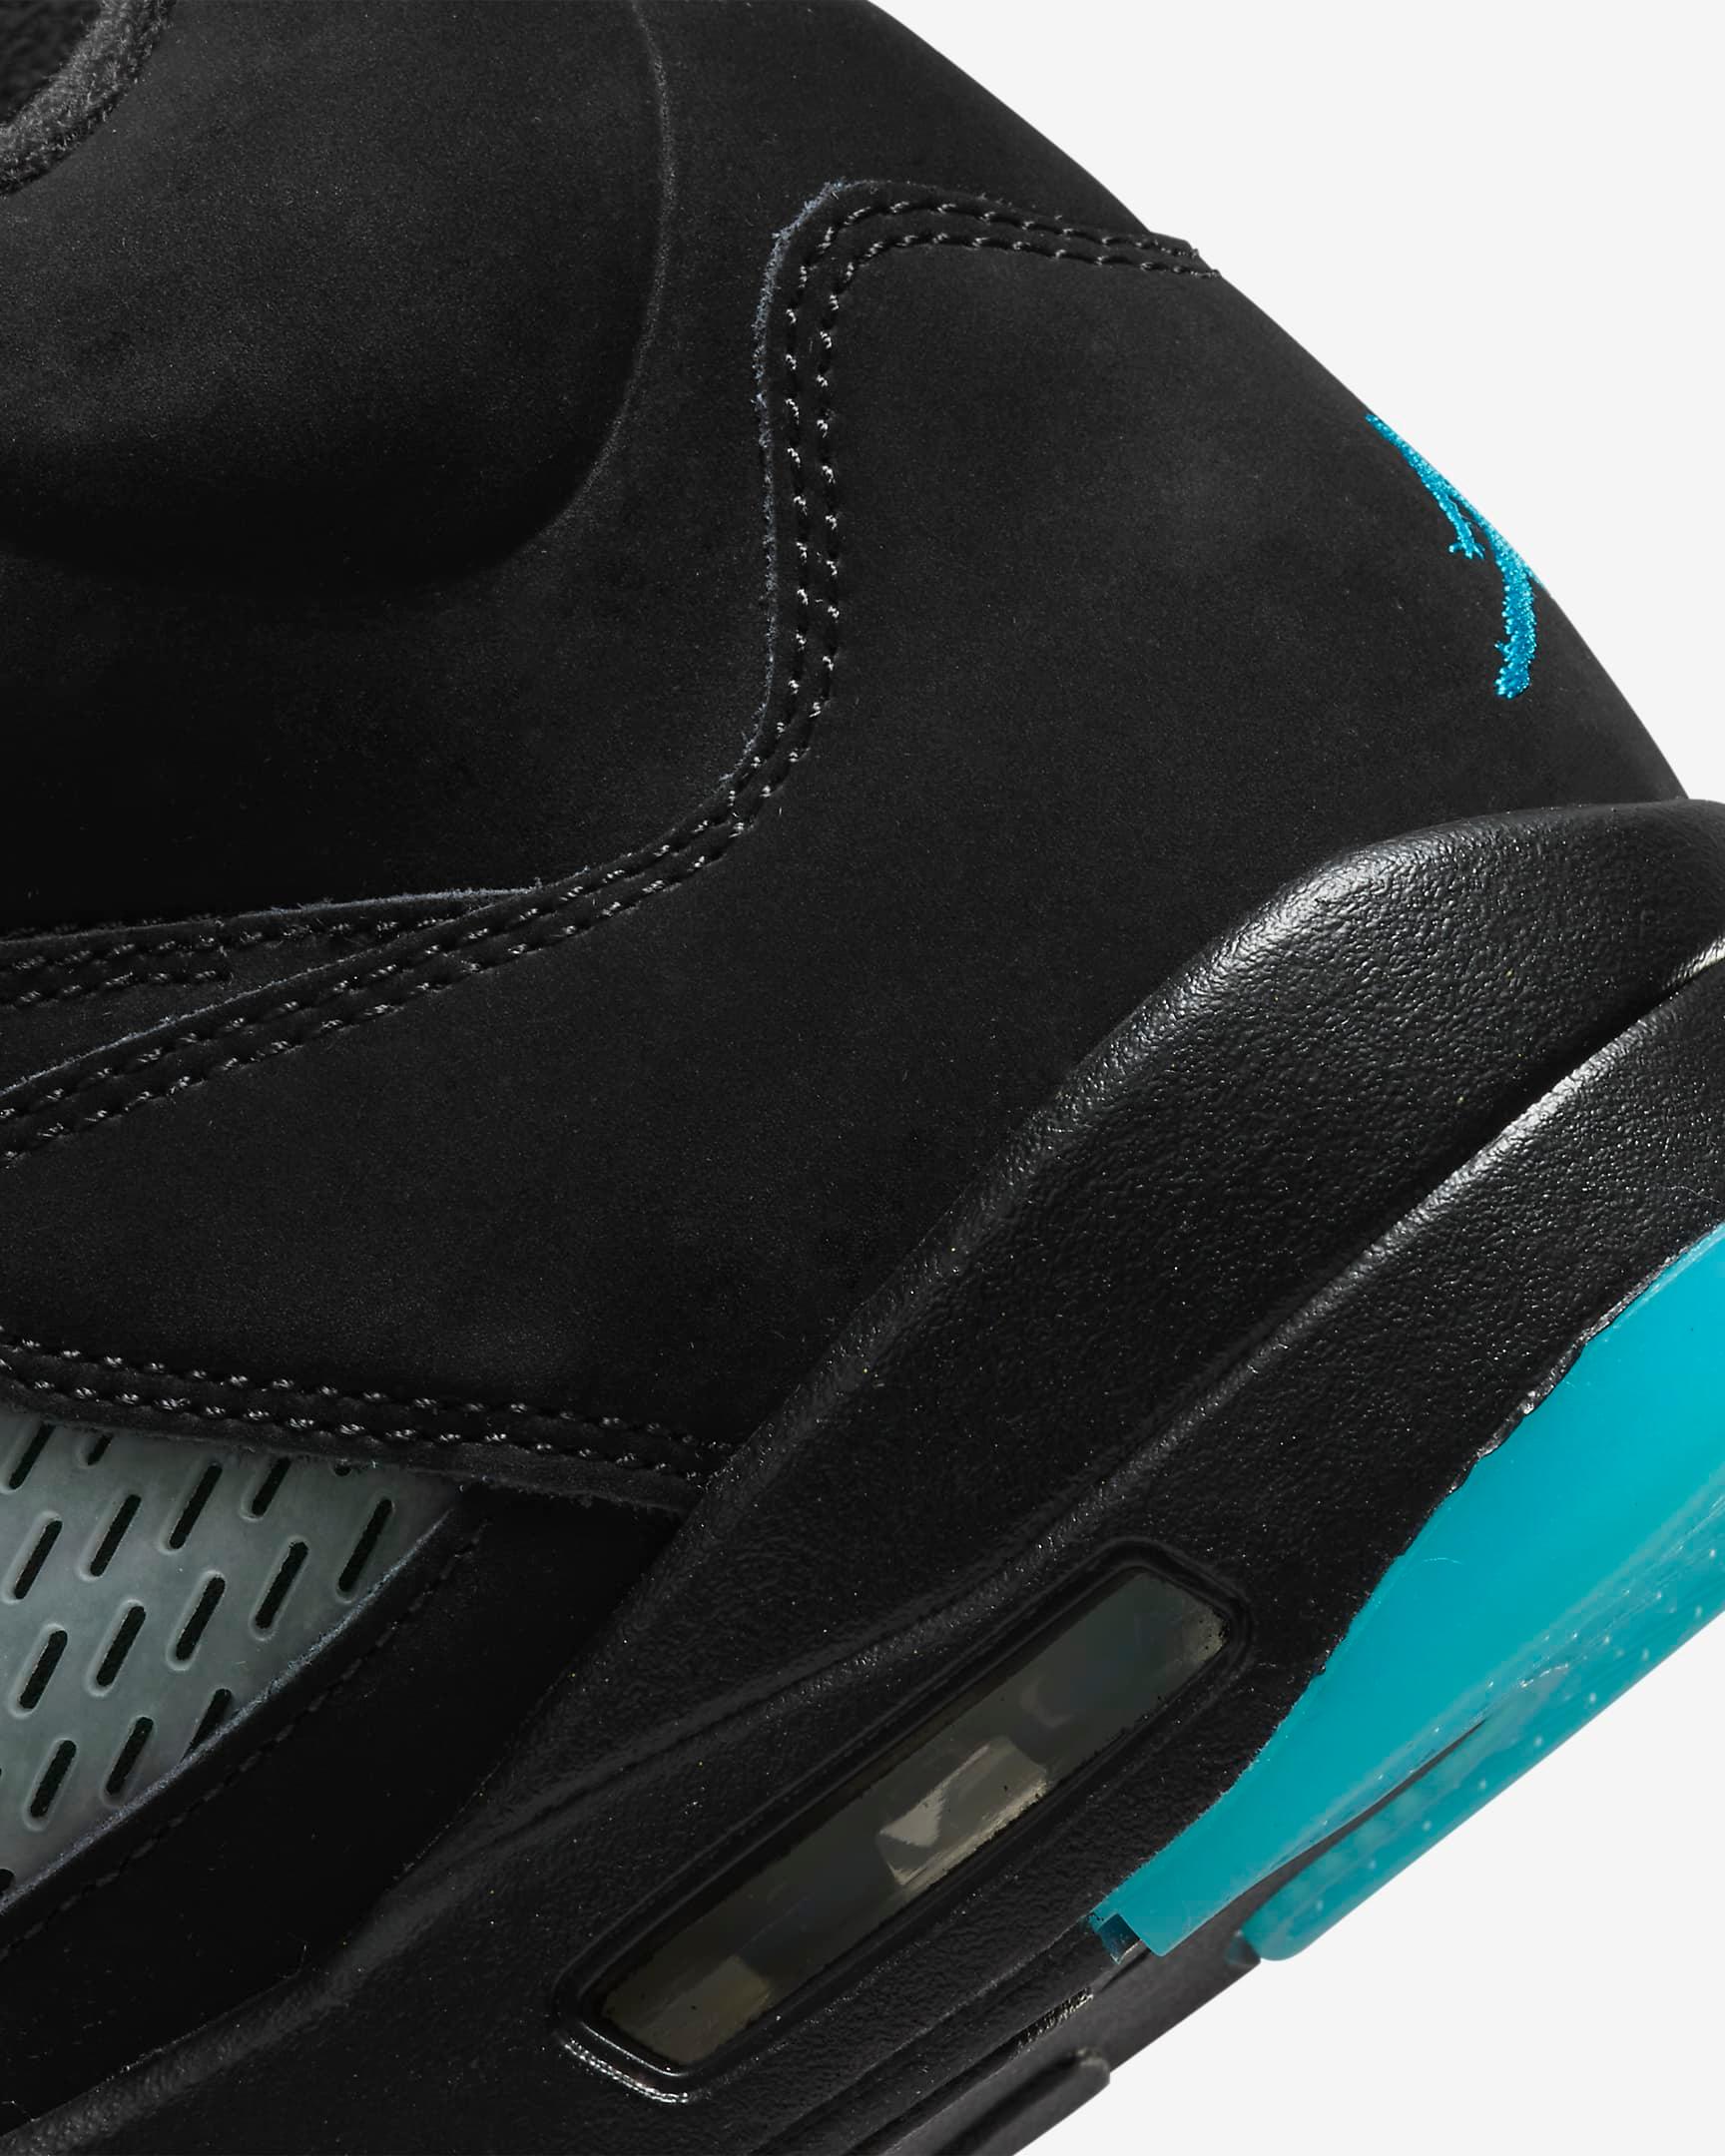 Giày Nike Air Jordan 5 Retro Men Shoes #Aquatone - Kallos Vietnam